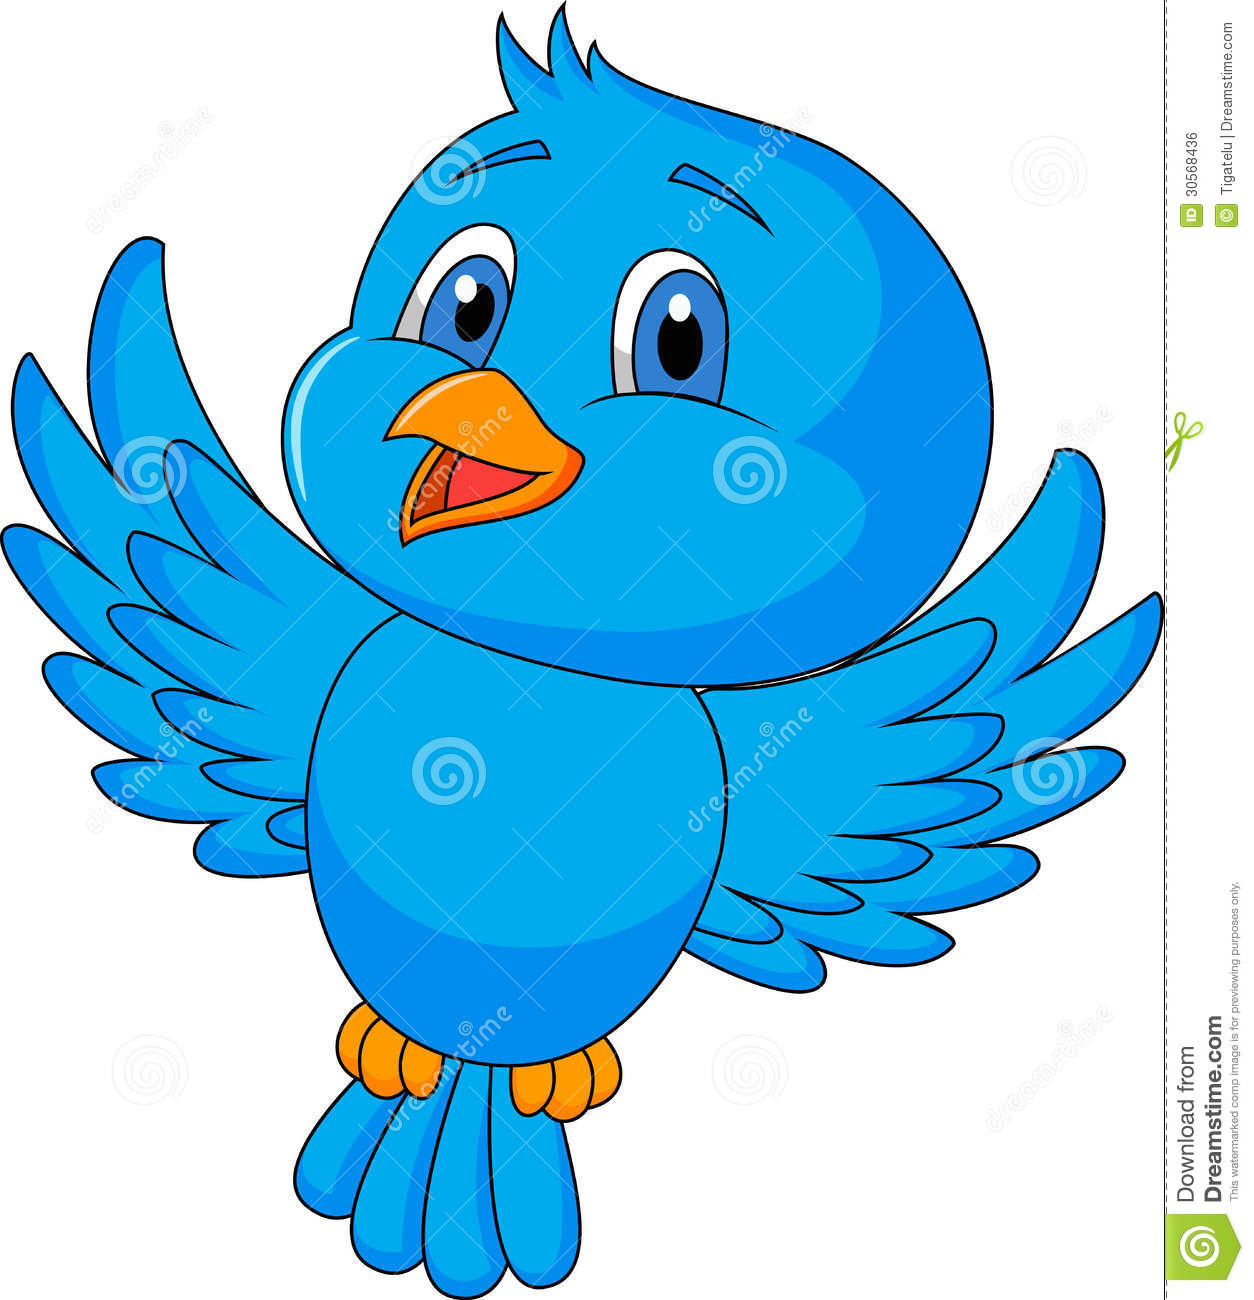 Cute Blue Bird Cartoon Royalty Free Stock Image   Image  30568436